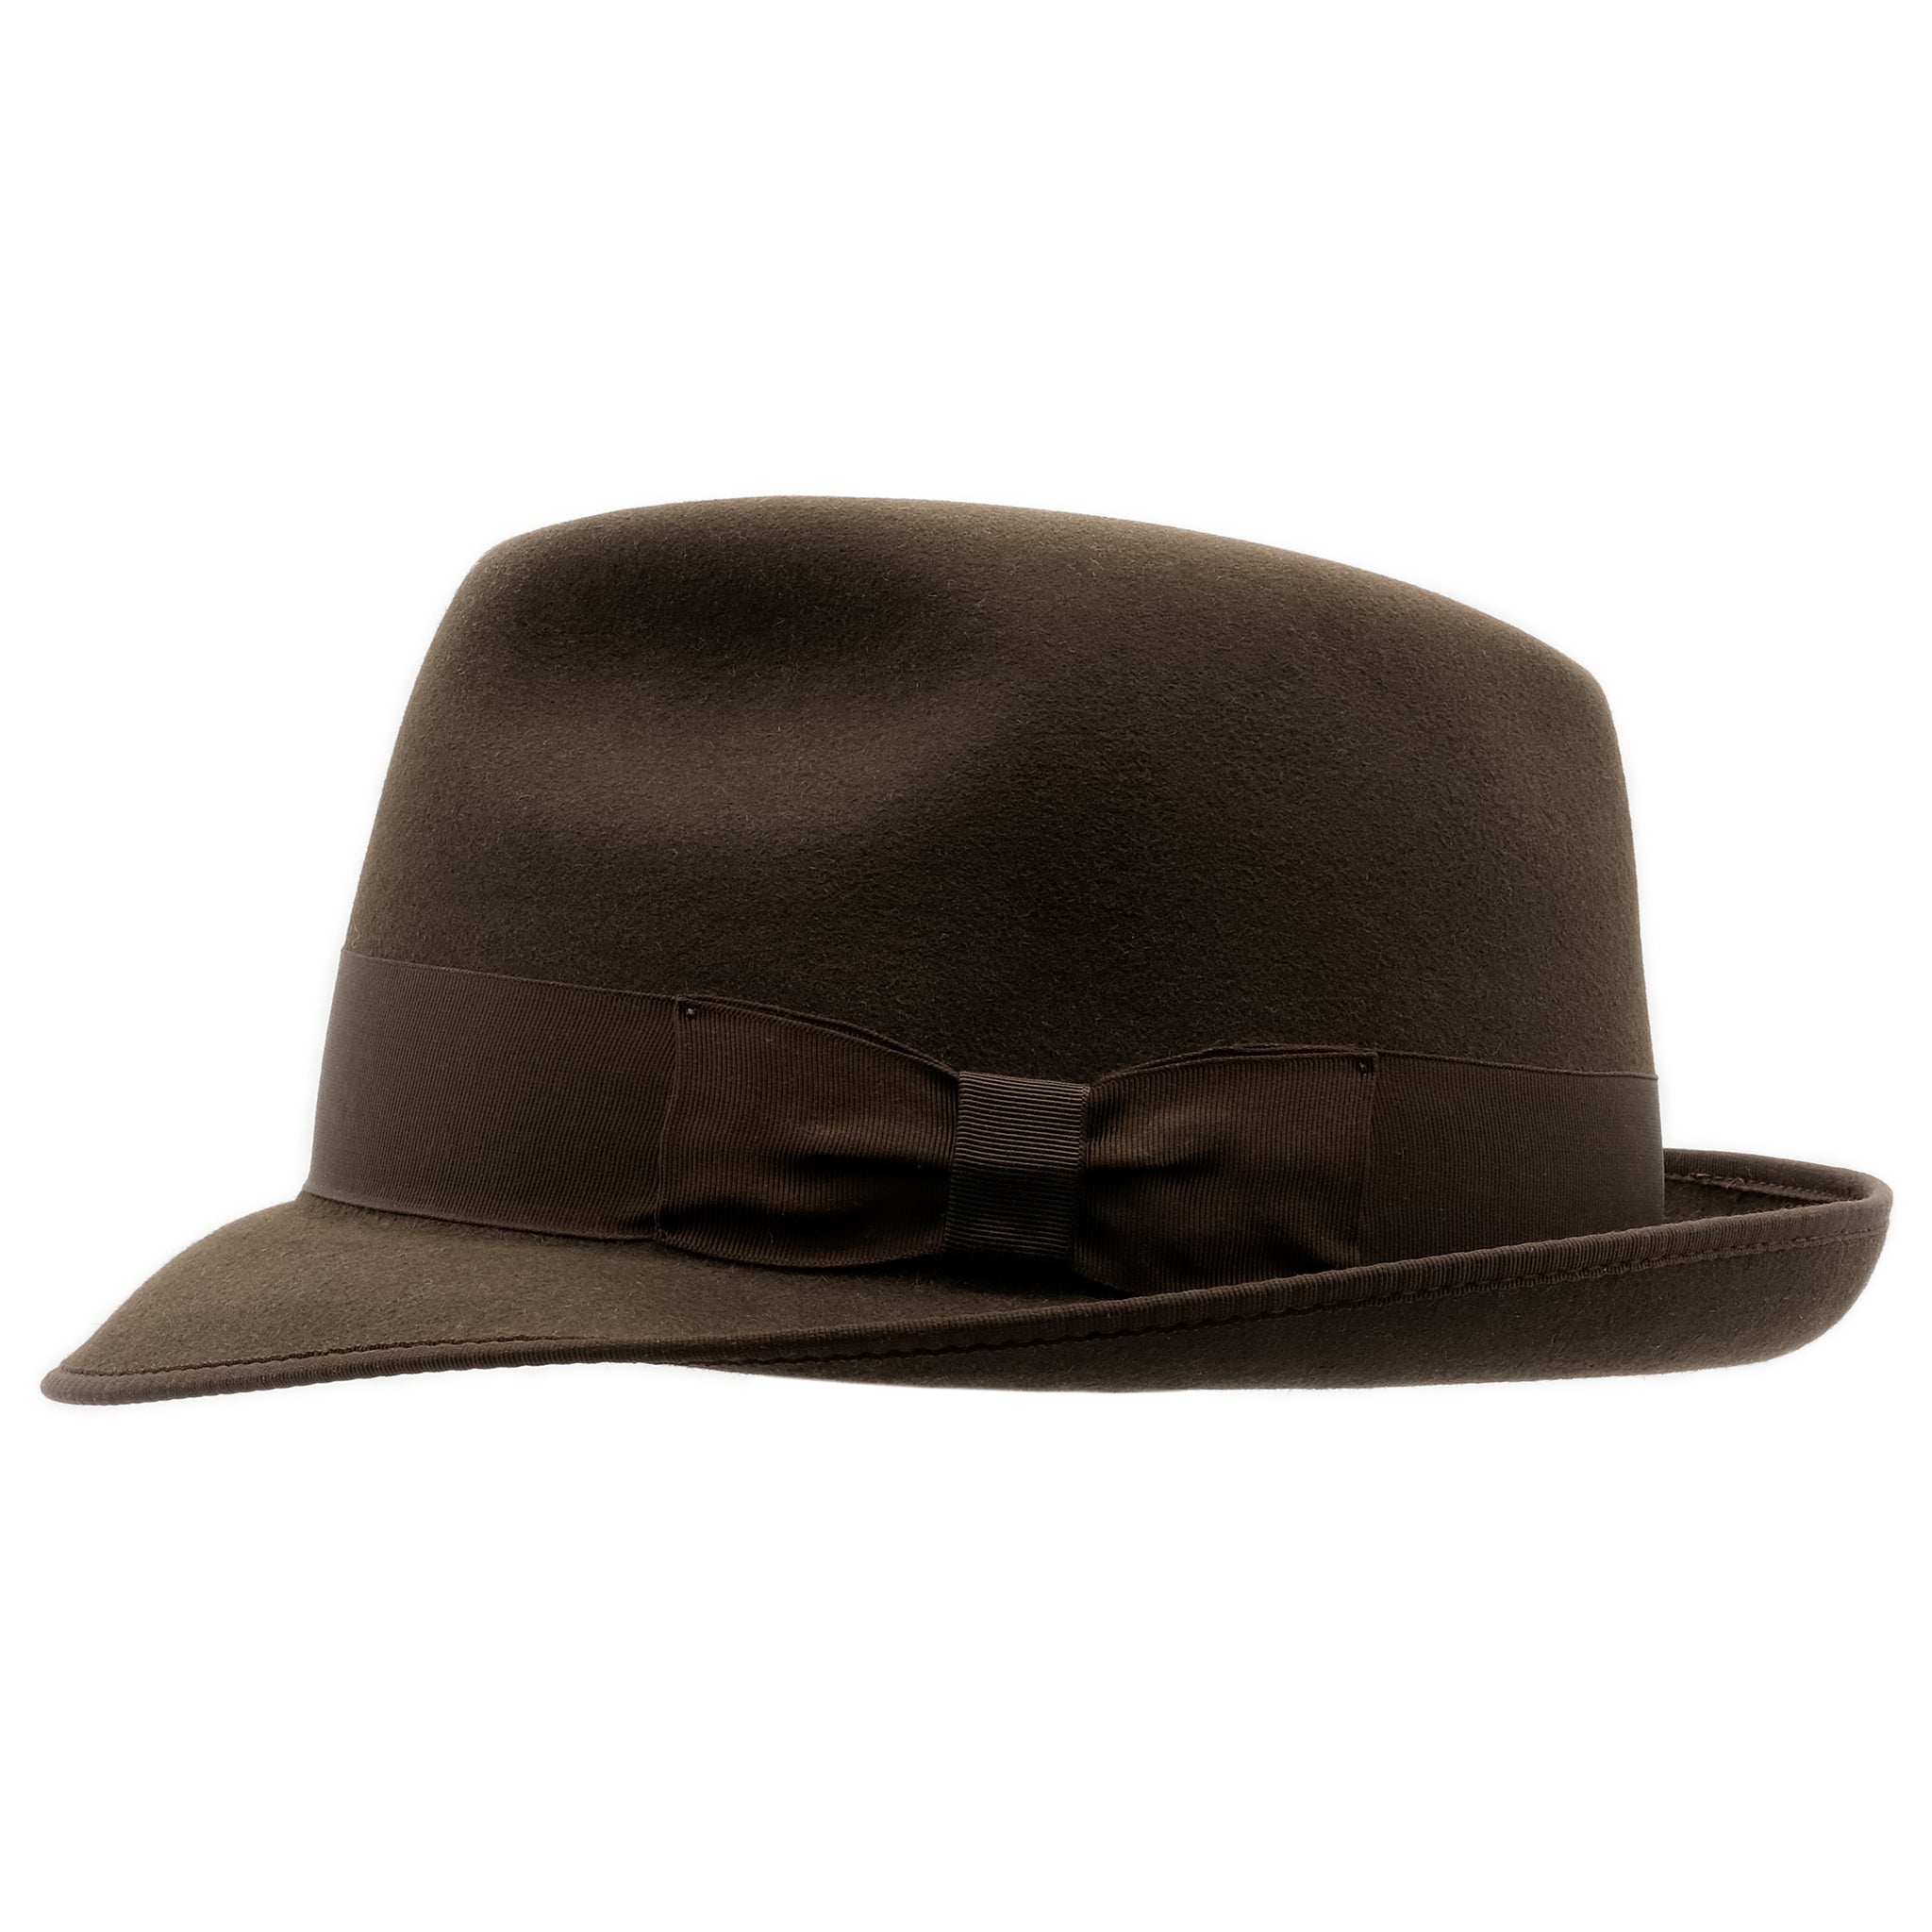 Side view of Akubra Hampton hat in Cedar Brown colour